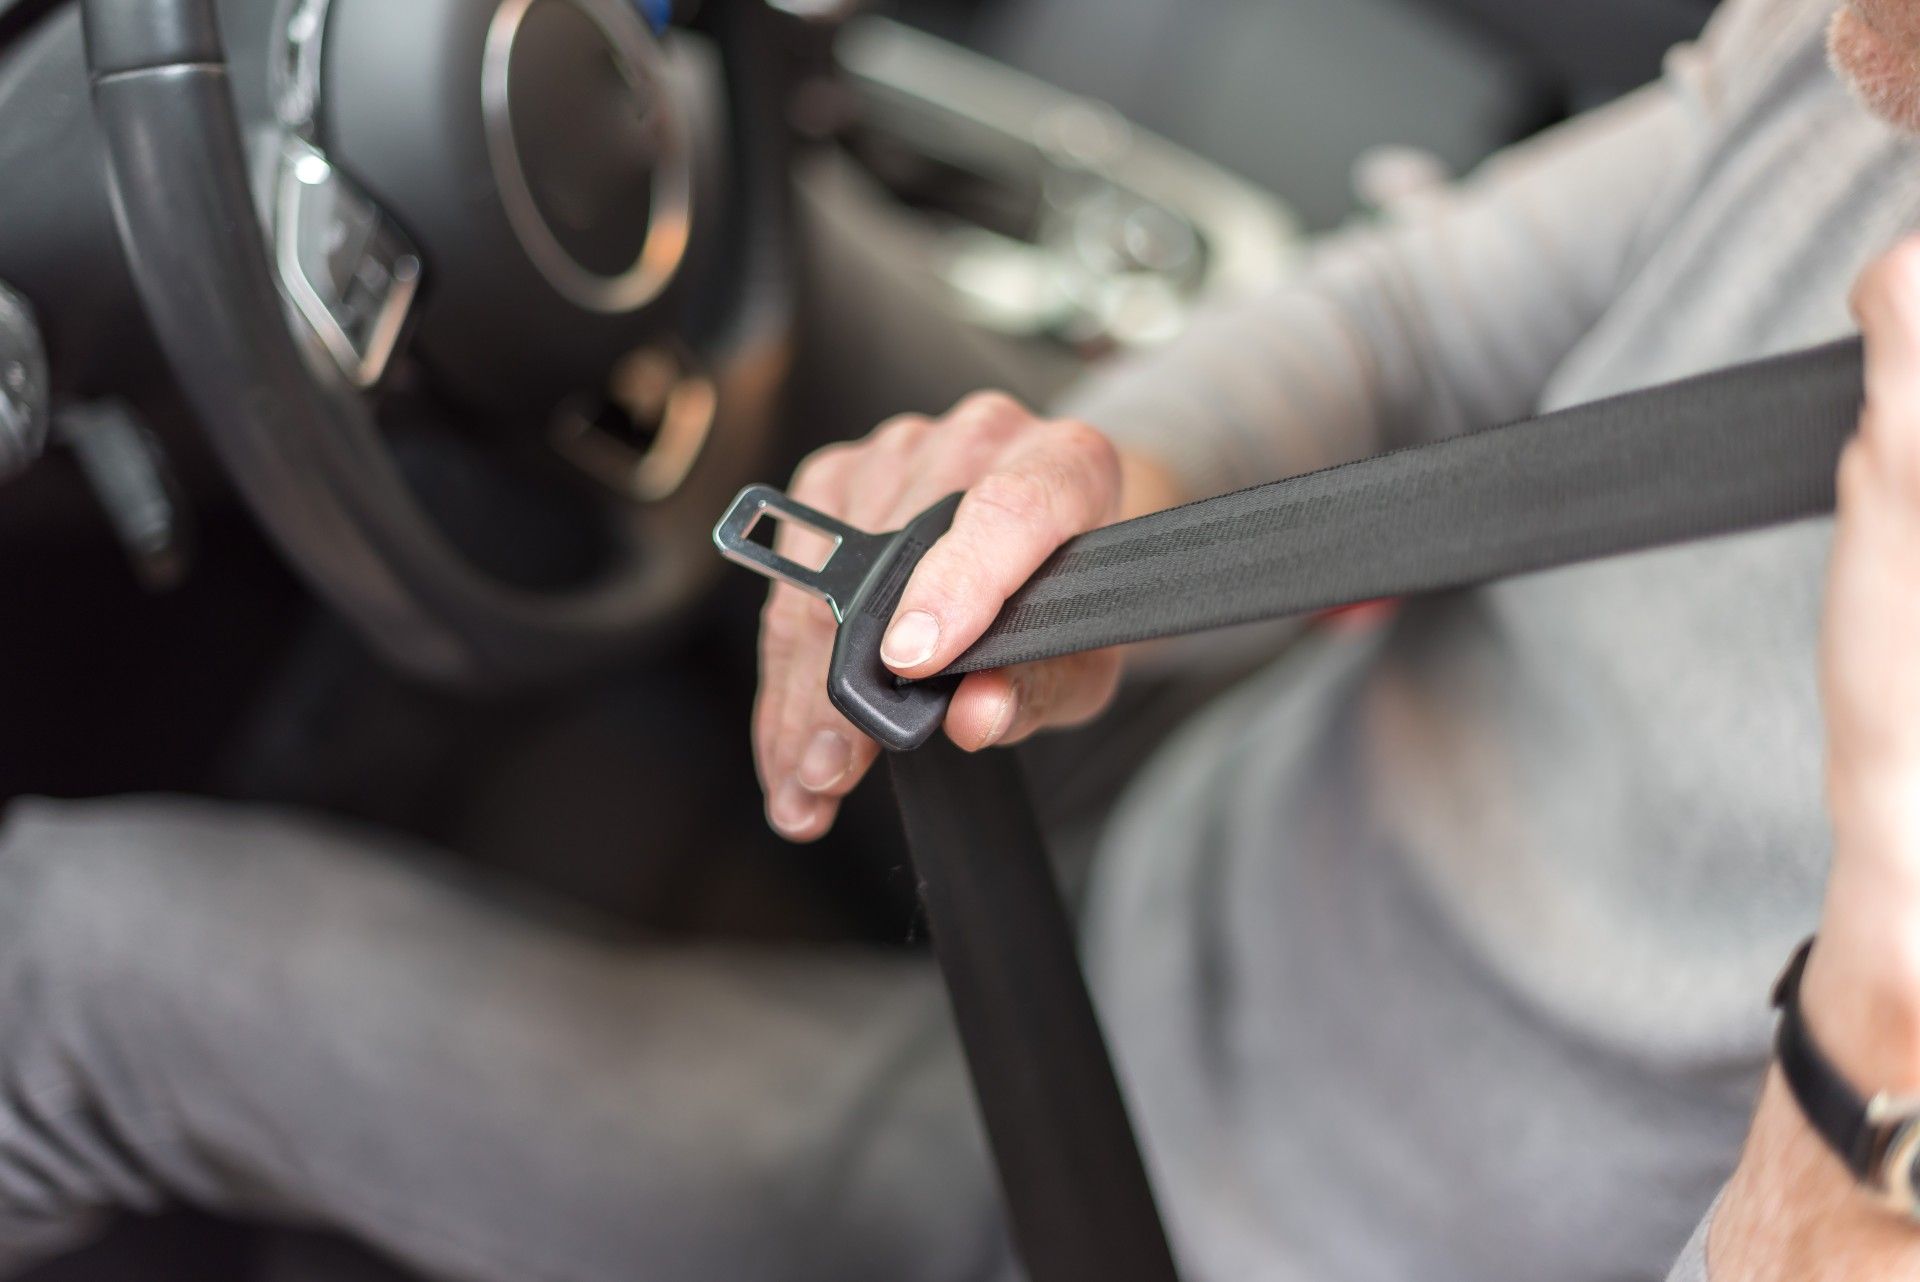 A man in a grey shirt puts on a seat belt - seat belt recall